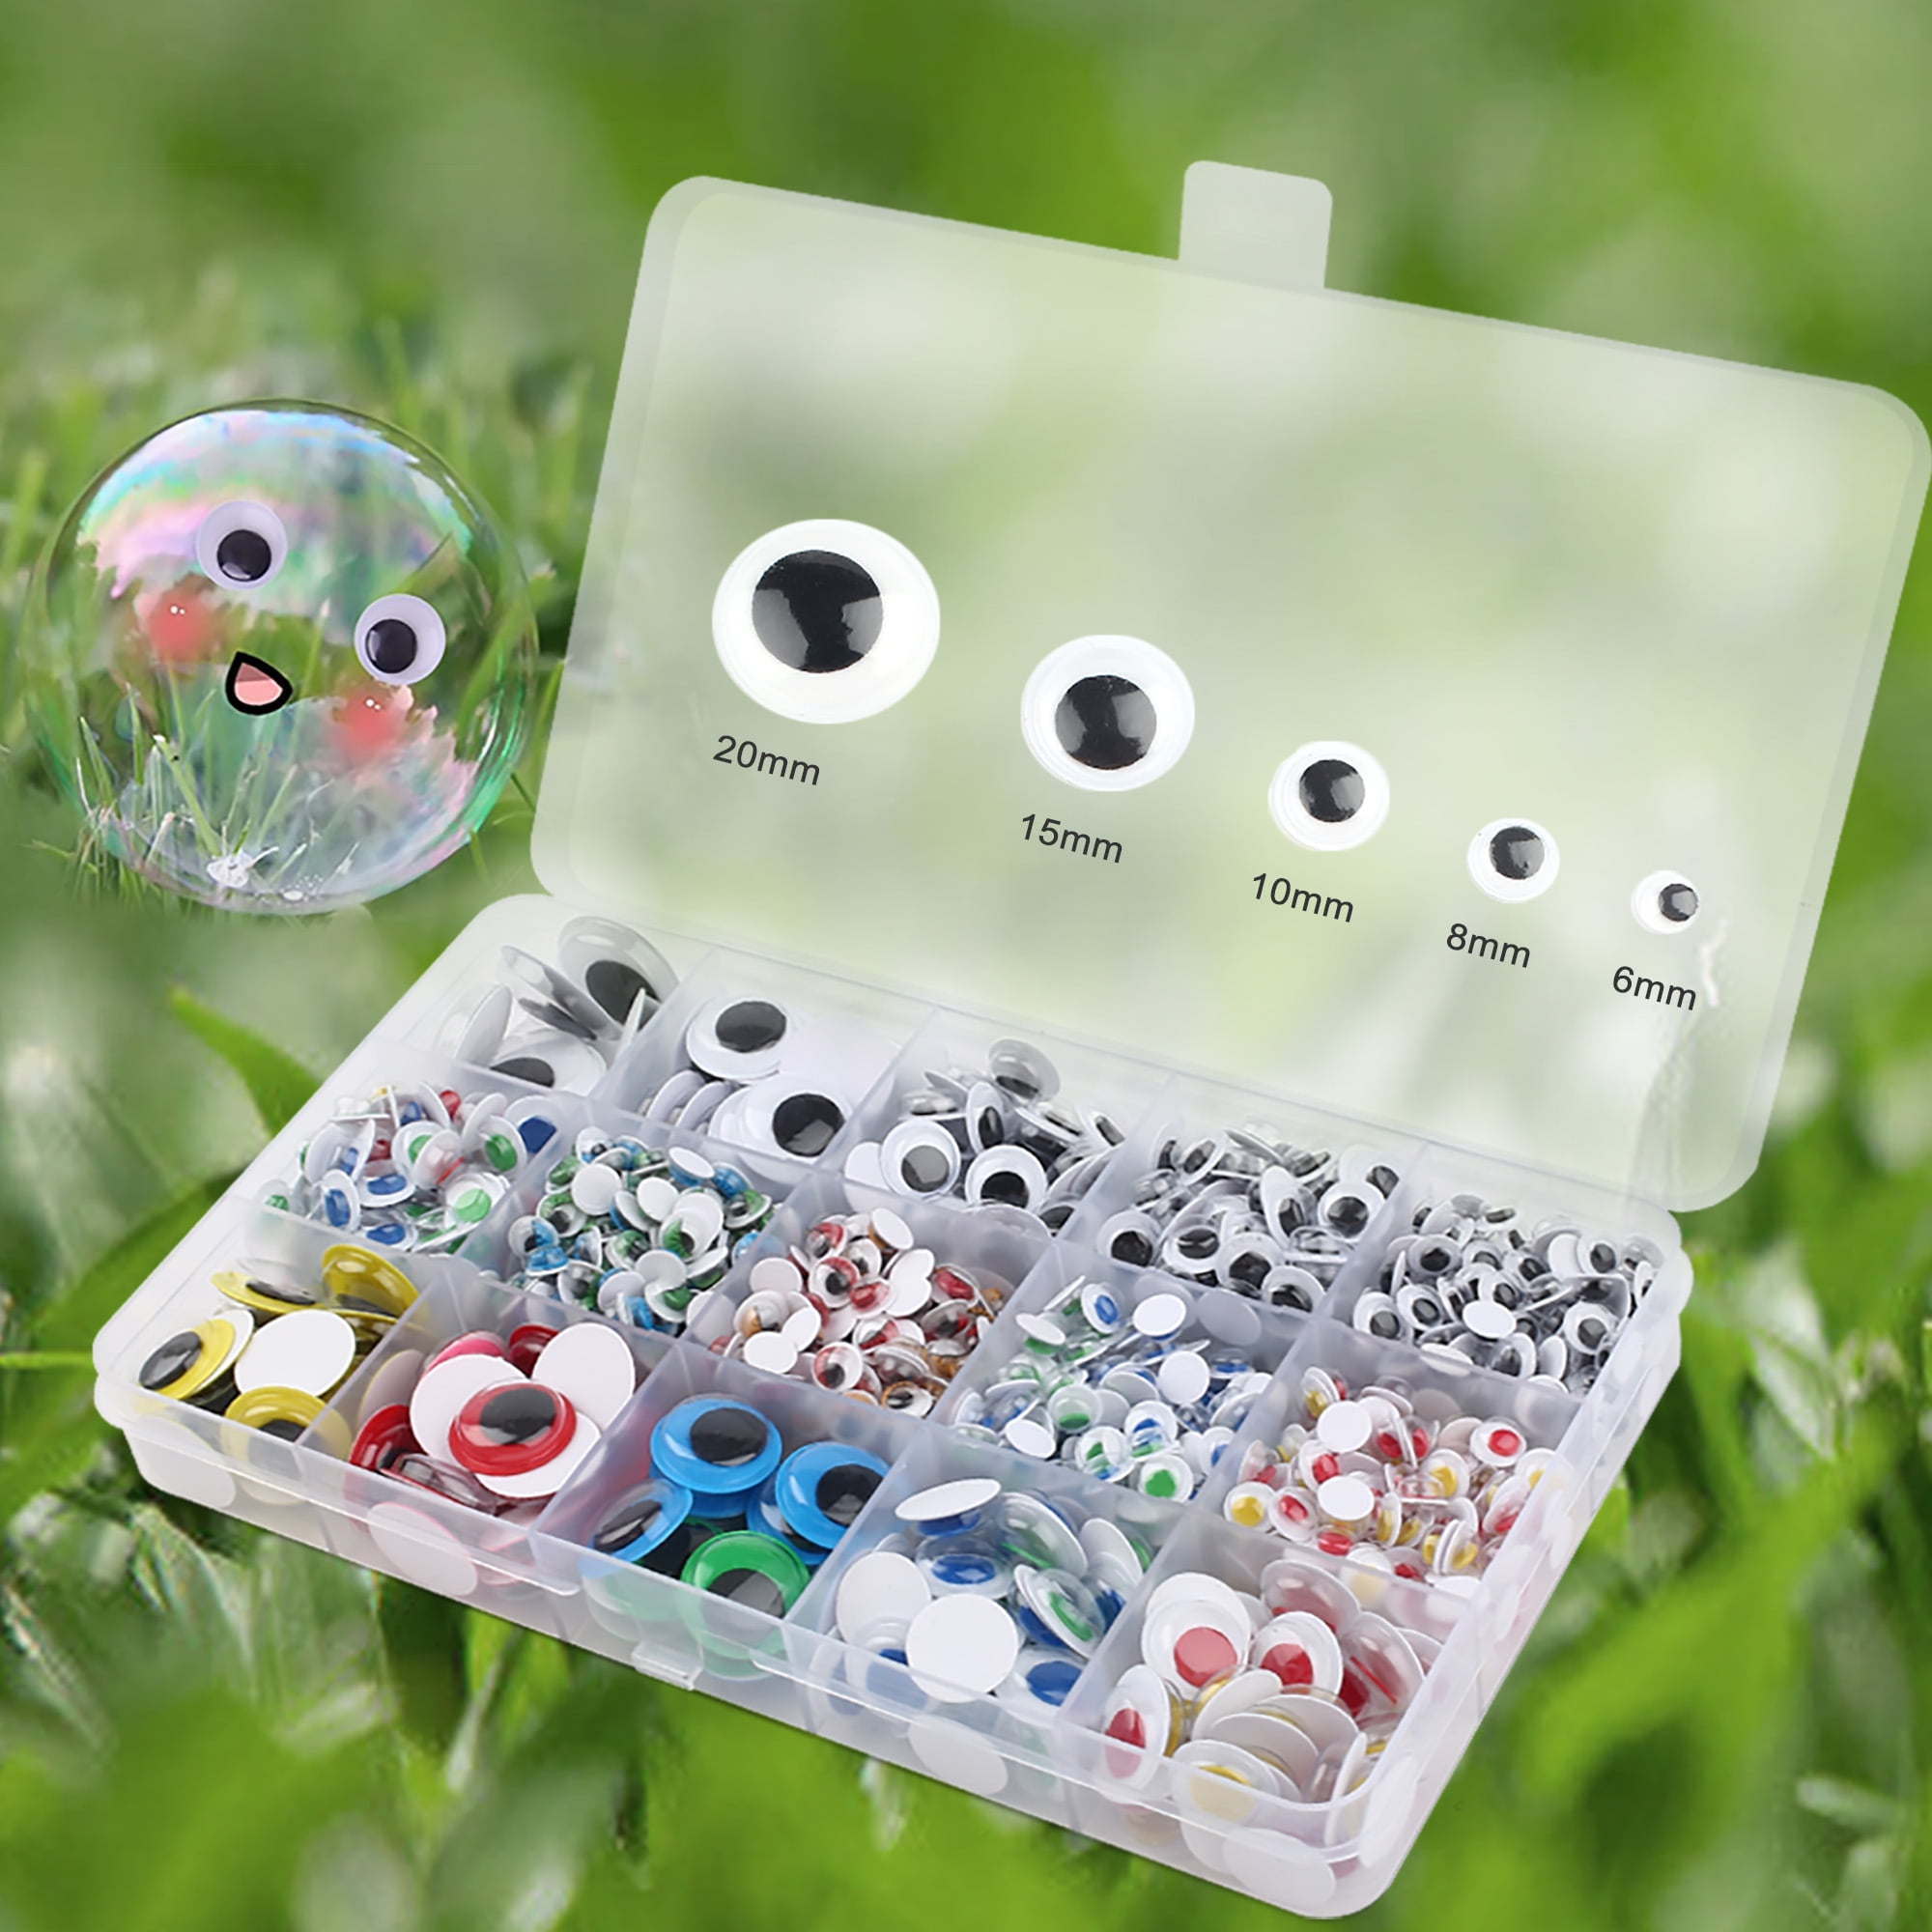 London Googly Eyes - Emergency Adhesive Eye Balls in Giftable Tin